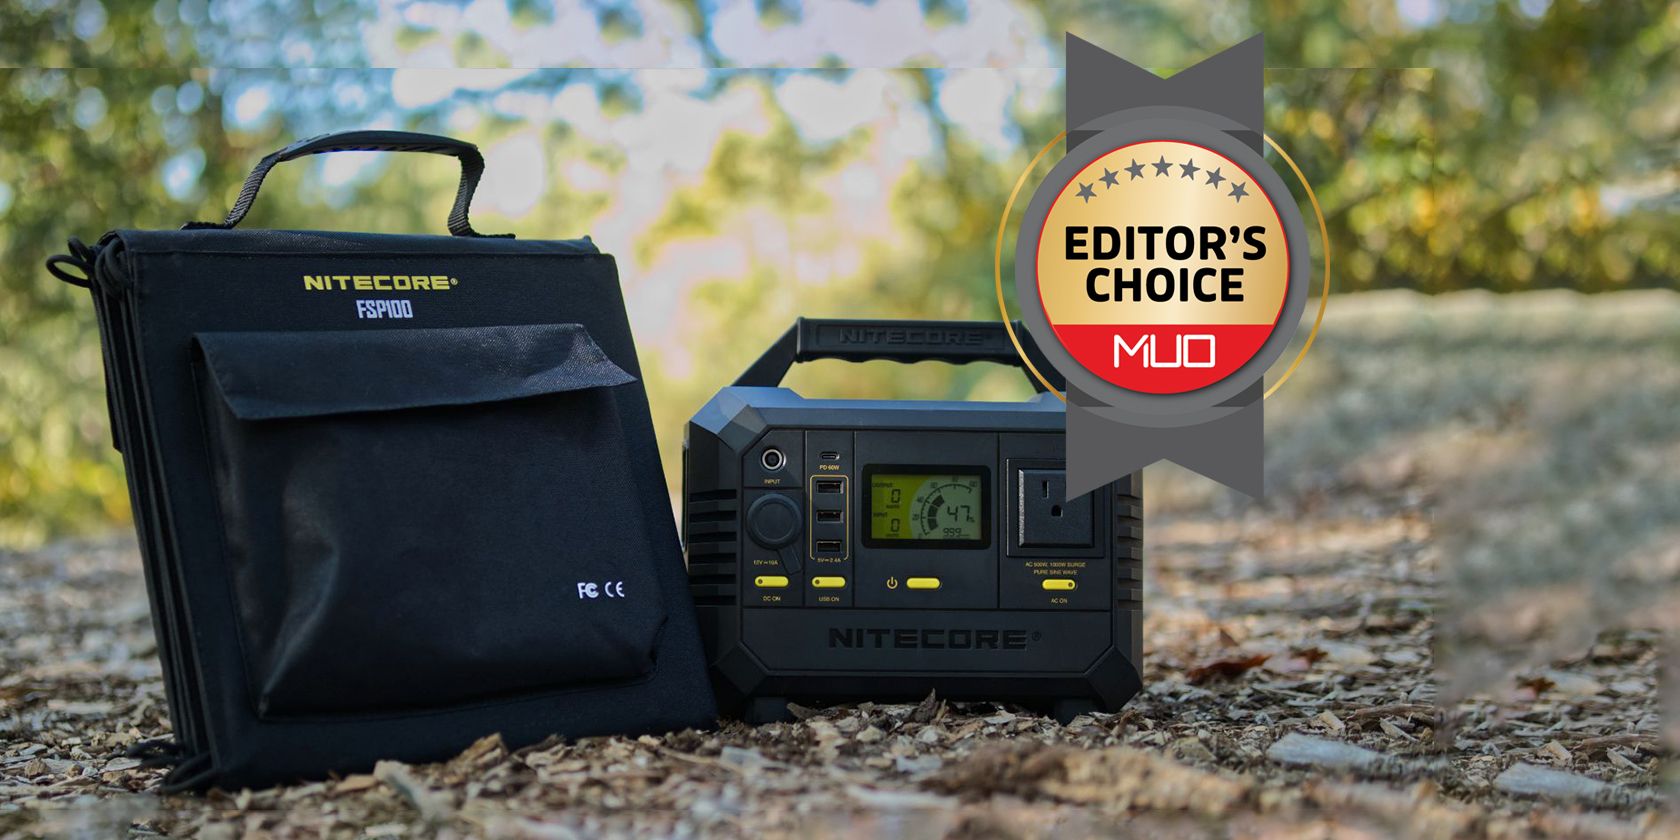 nitecore nes500 and solar panel outdoors featured image awarded editors choice